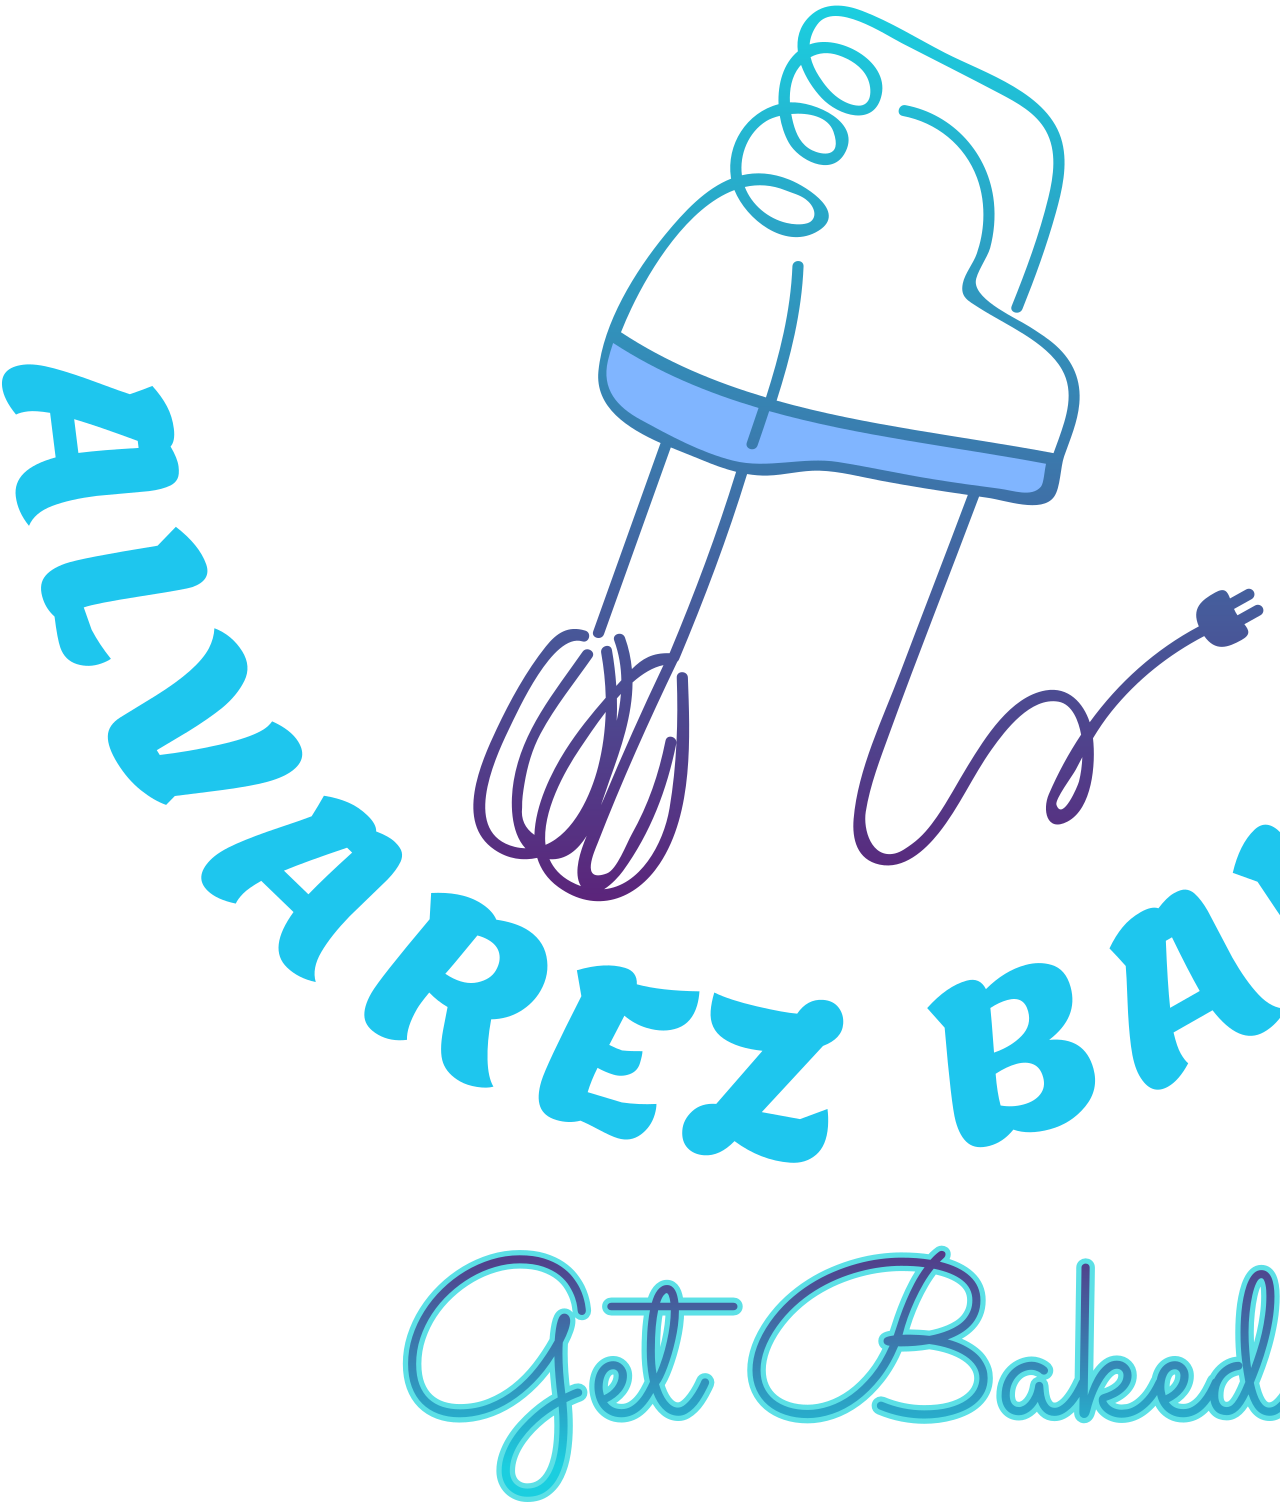 ALVAREZ BAKERY's logo